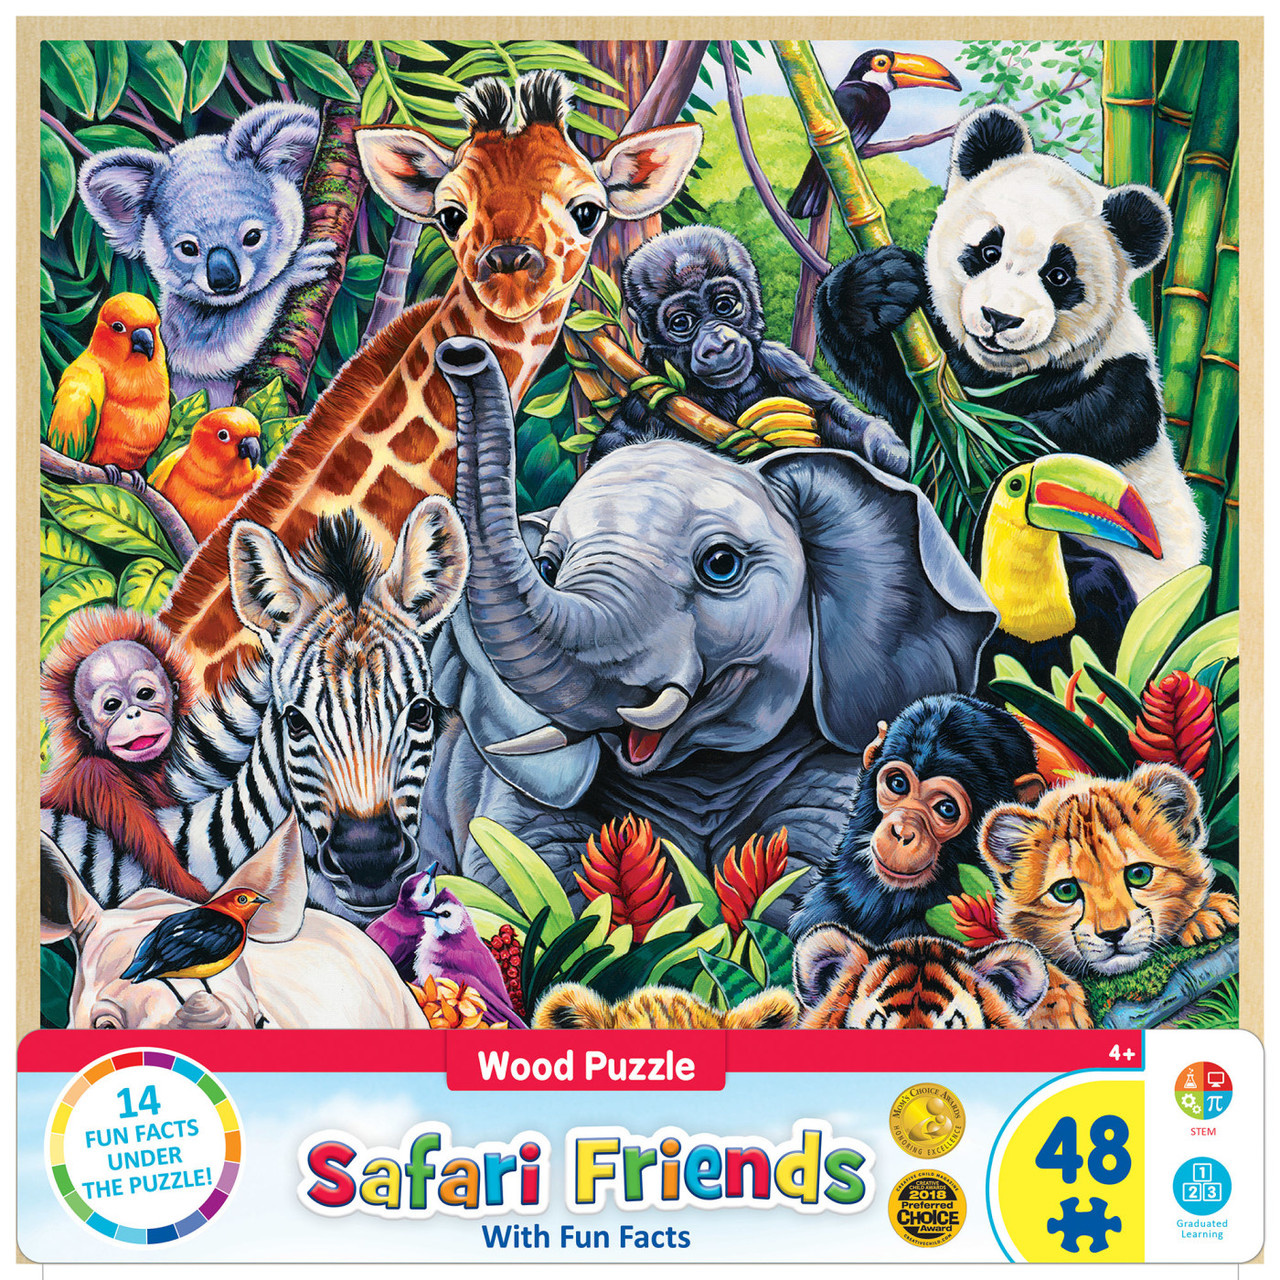 Masterpiece Wood Fun Facts - Safari Friends 48pc Wood Puzzle